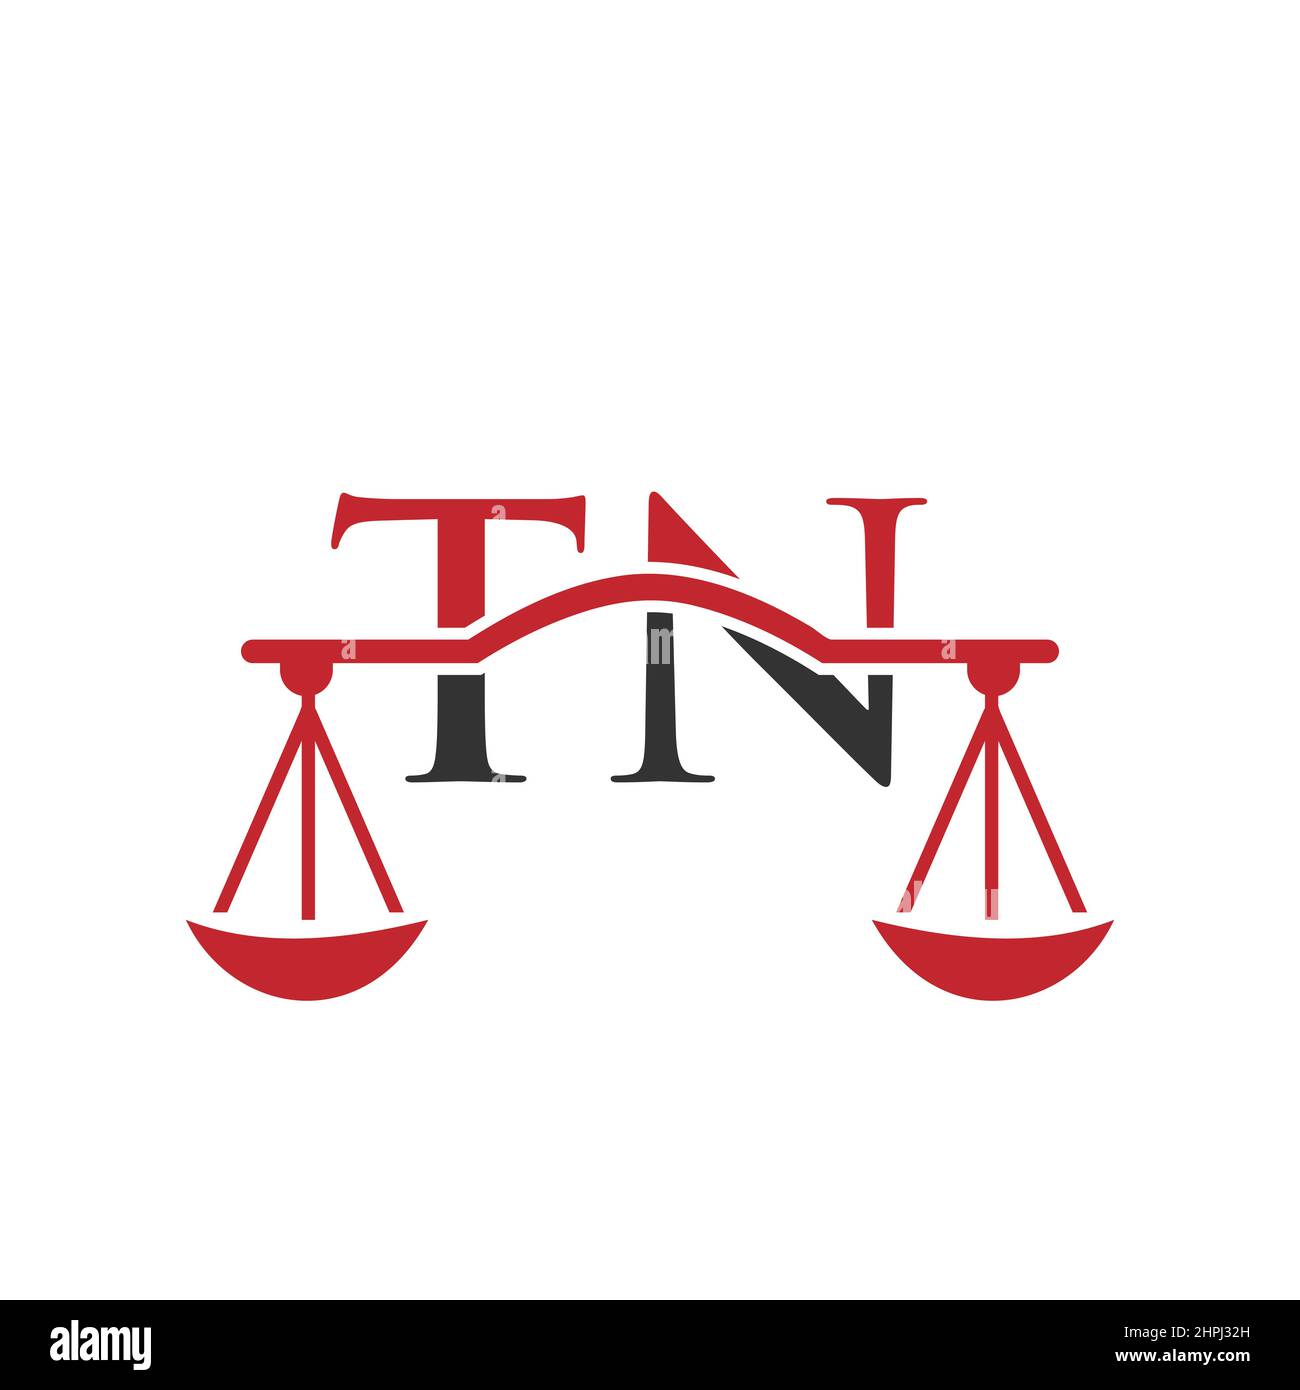 Tn logo design Stock Vector Images - Alamy